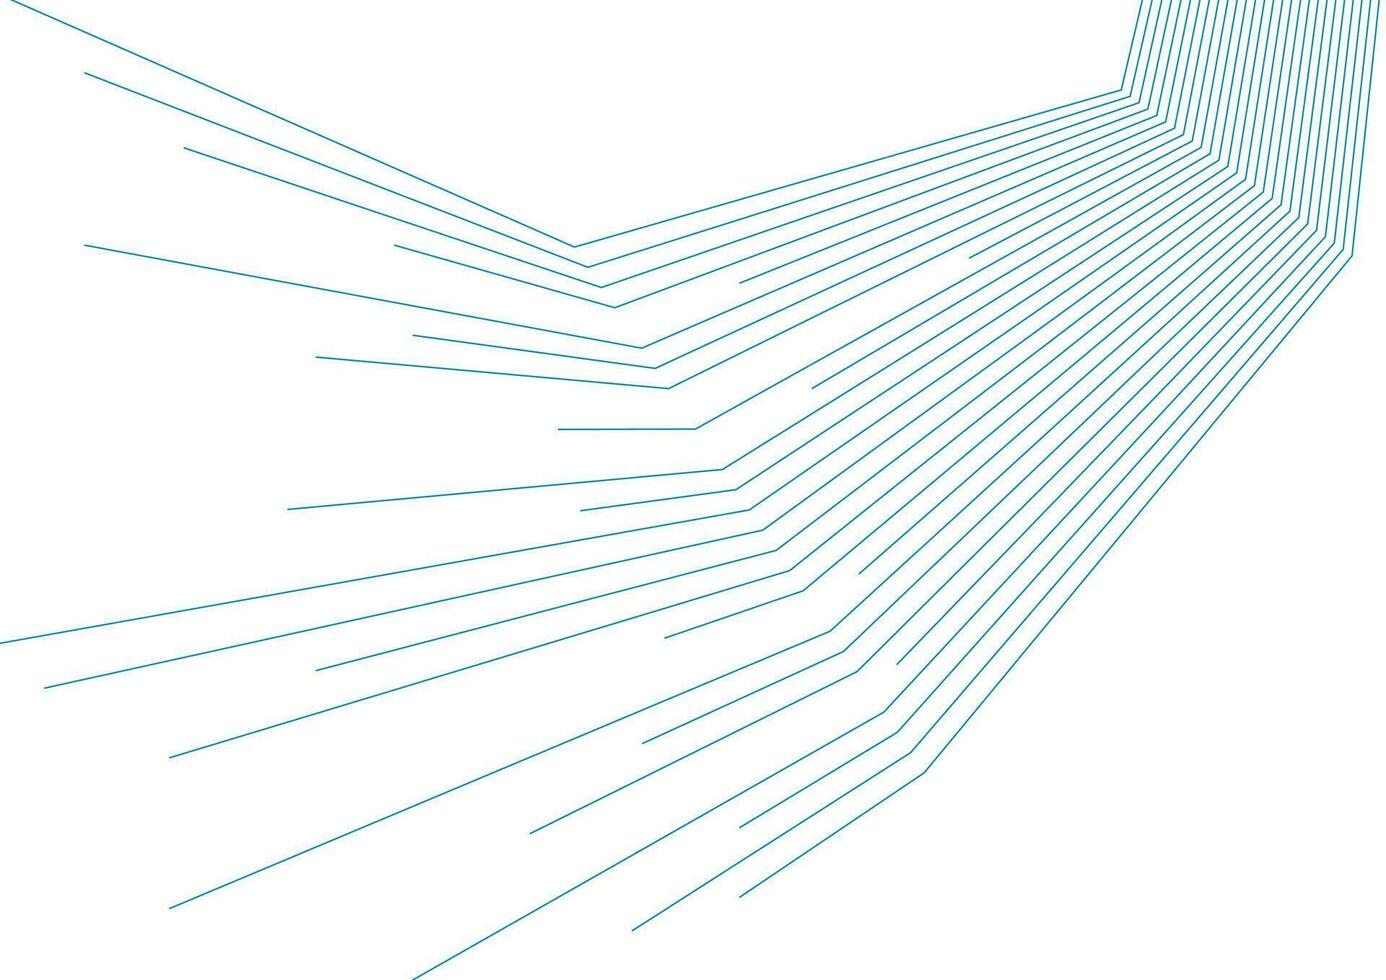 blauw wit minimaal lijnen abstract futuristische tech achtergrond vector